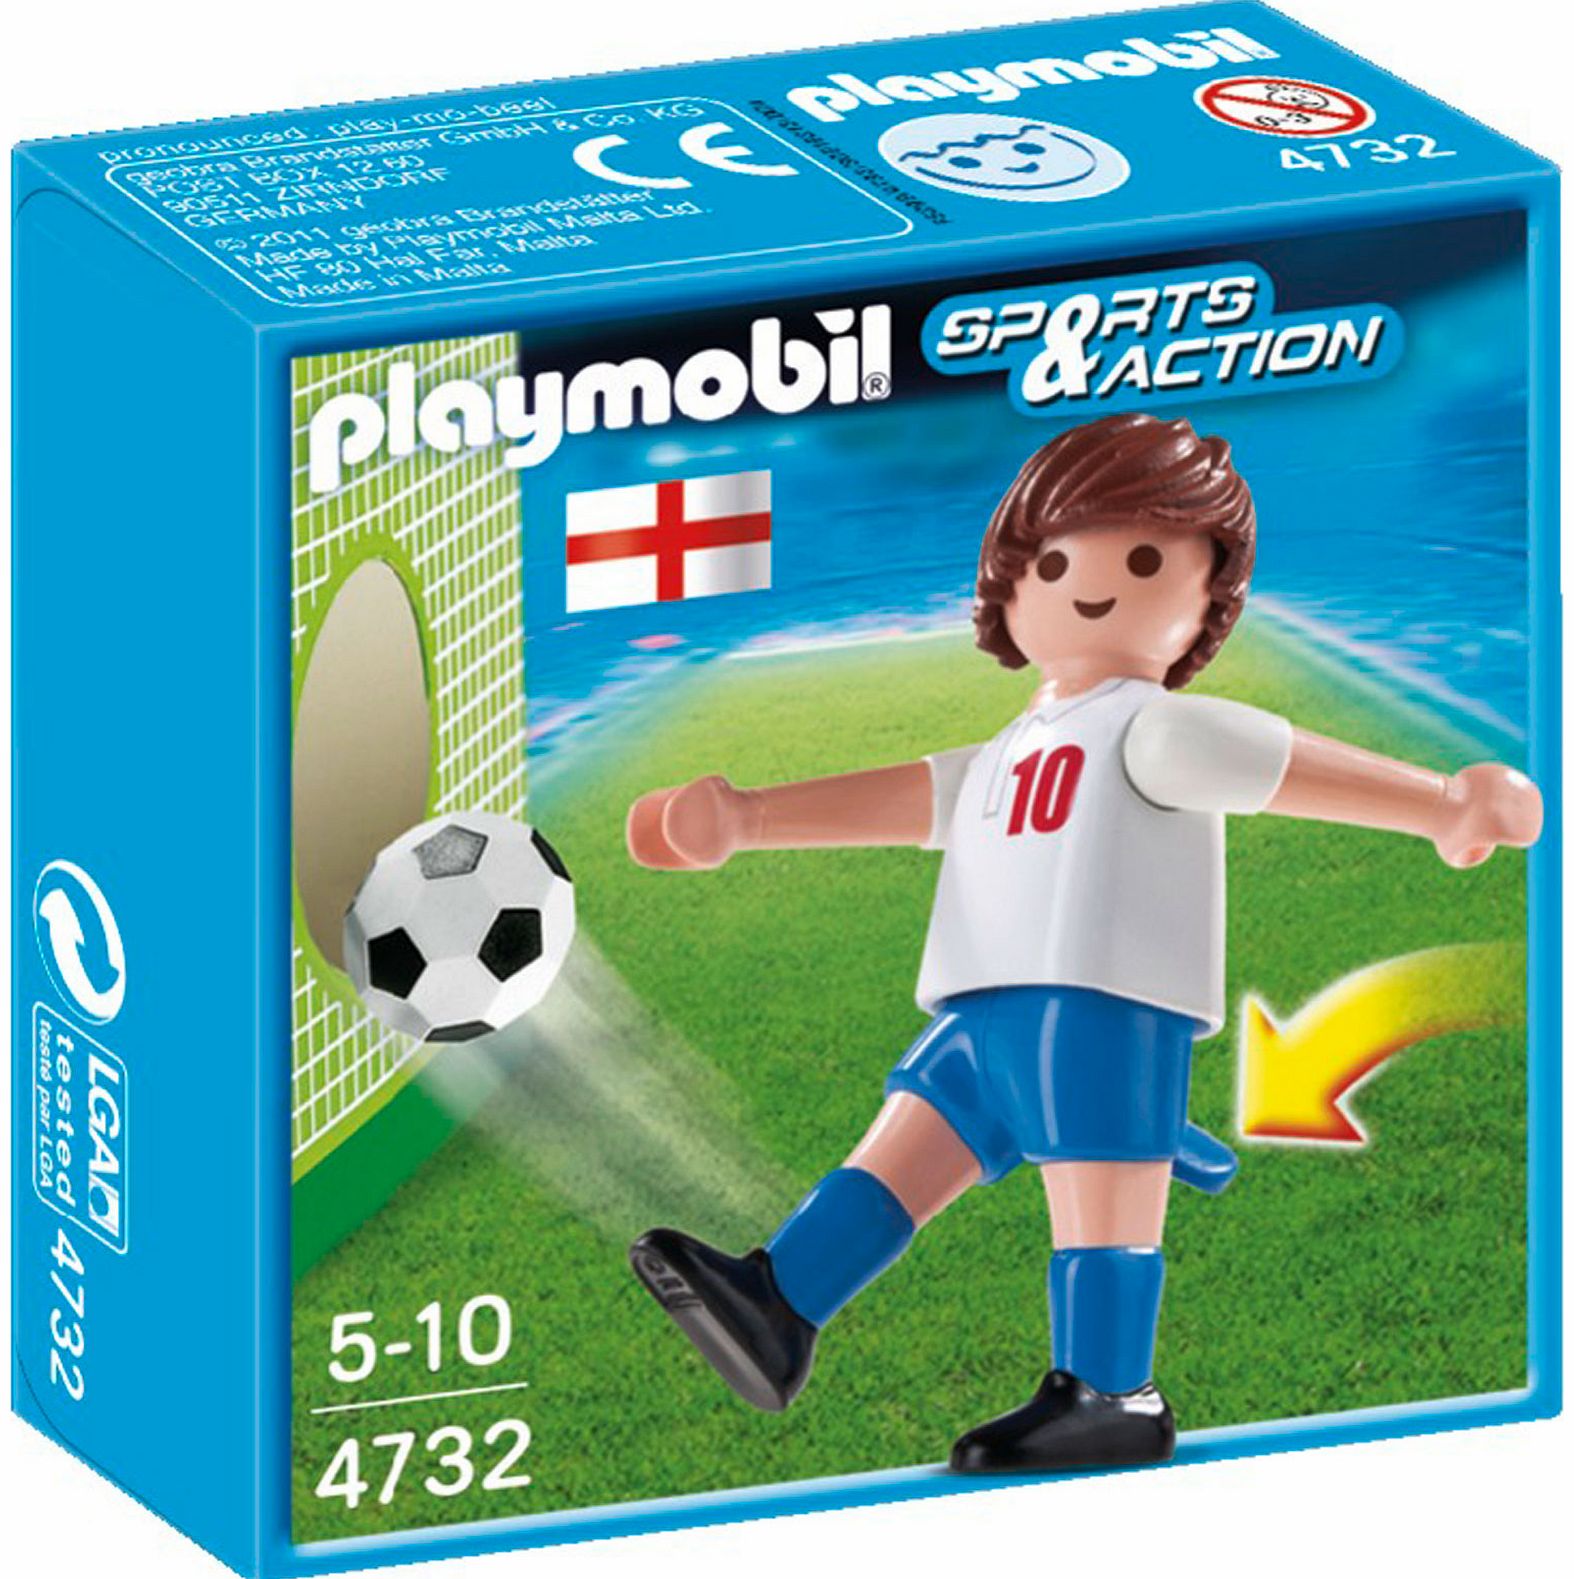 Soccer Player - England 4732